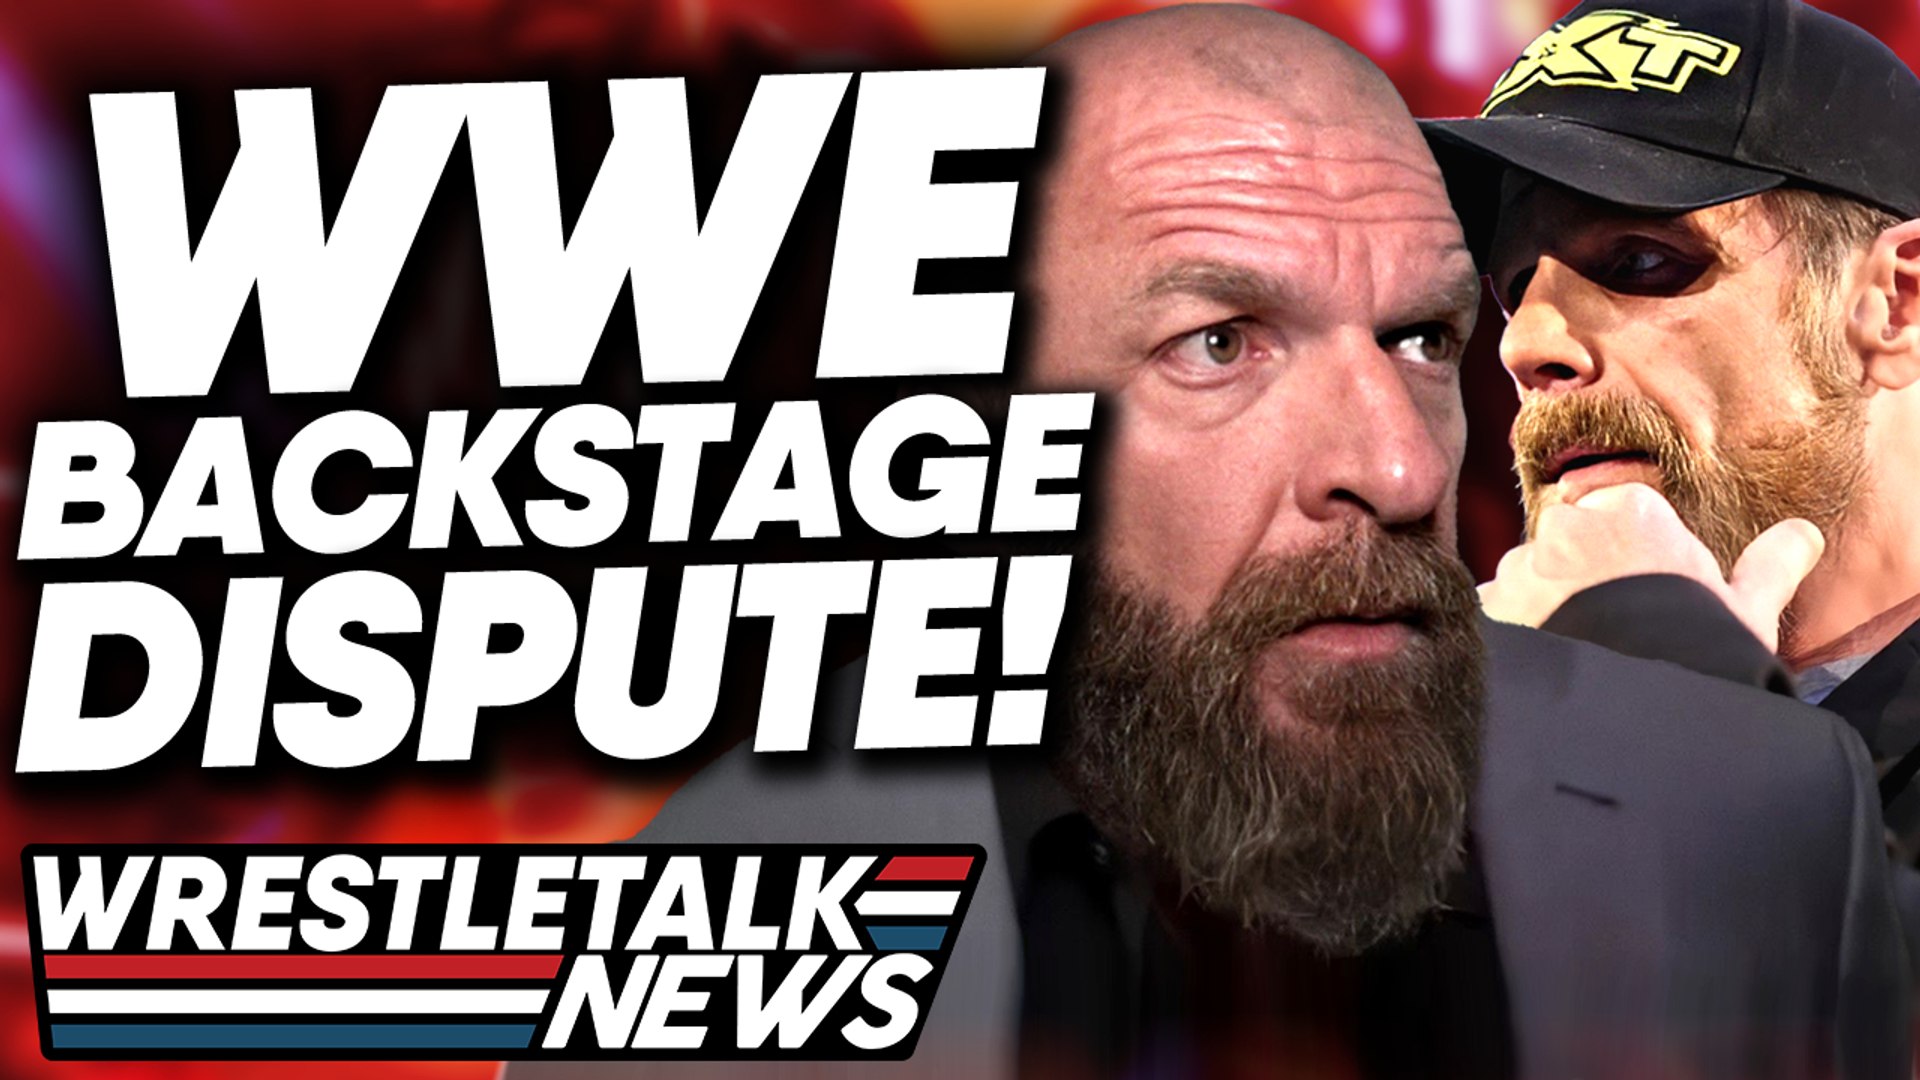 Planned Main Event For WWE Survivor Series 2023 Revealed - WrestleTalk